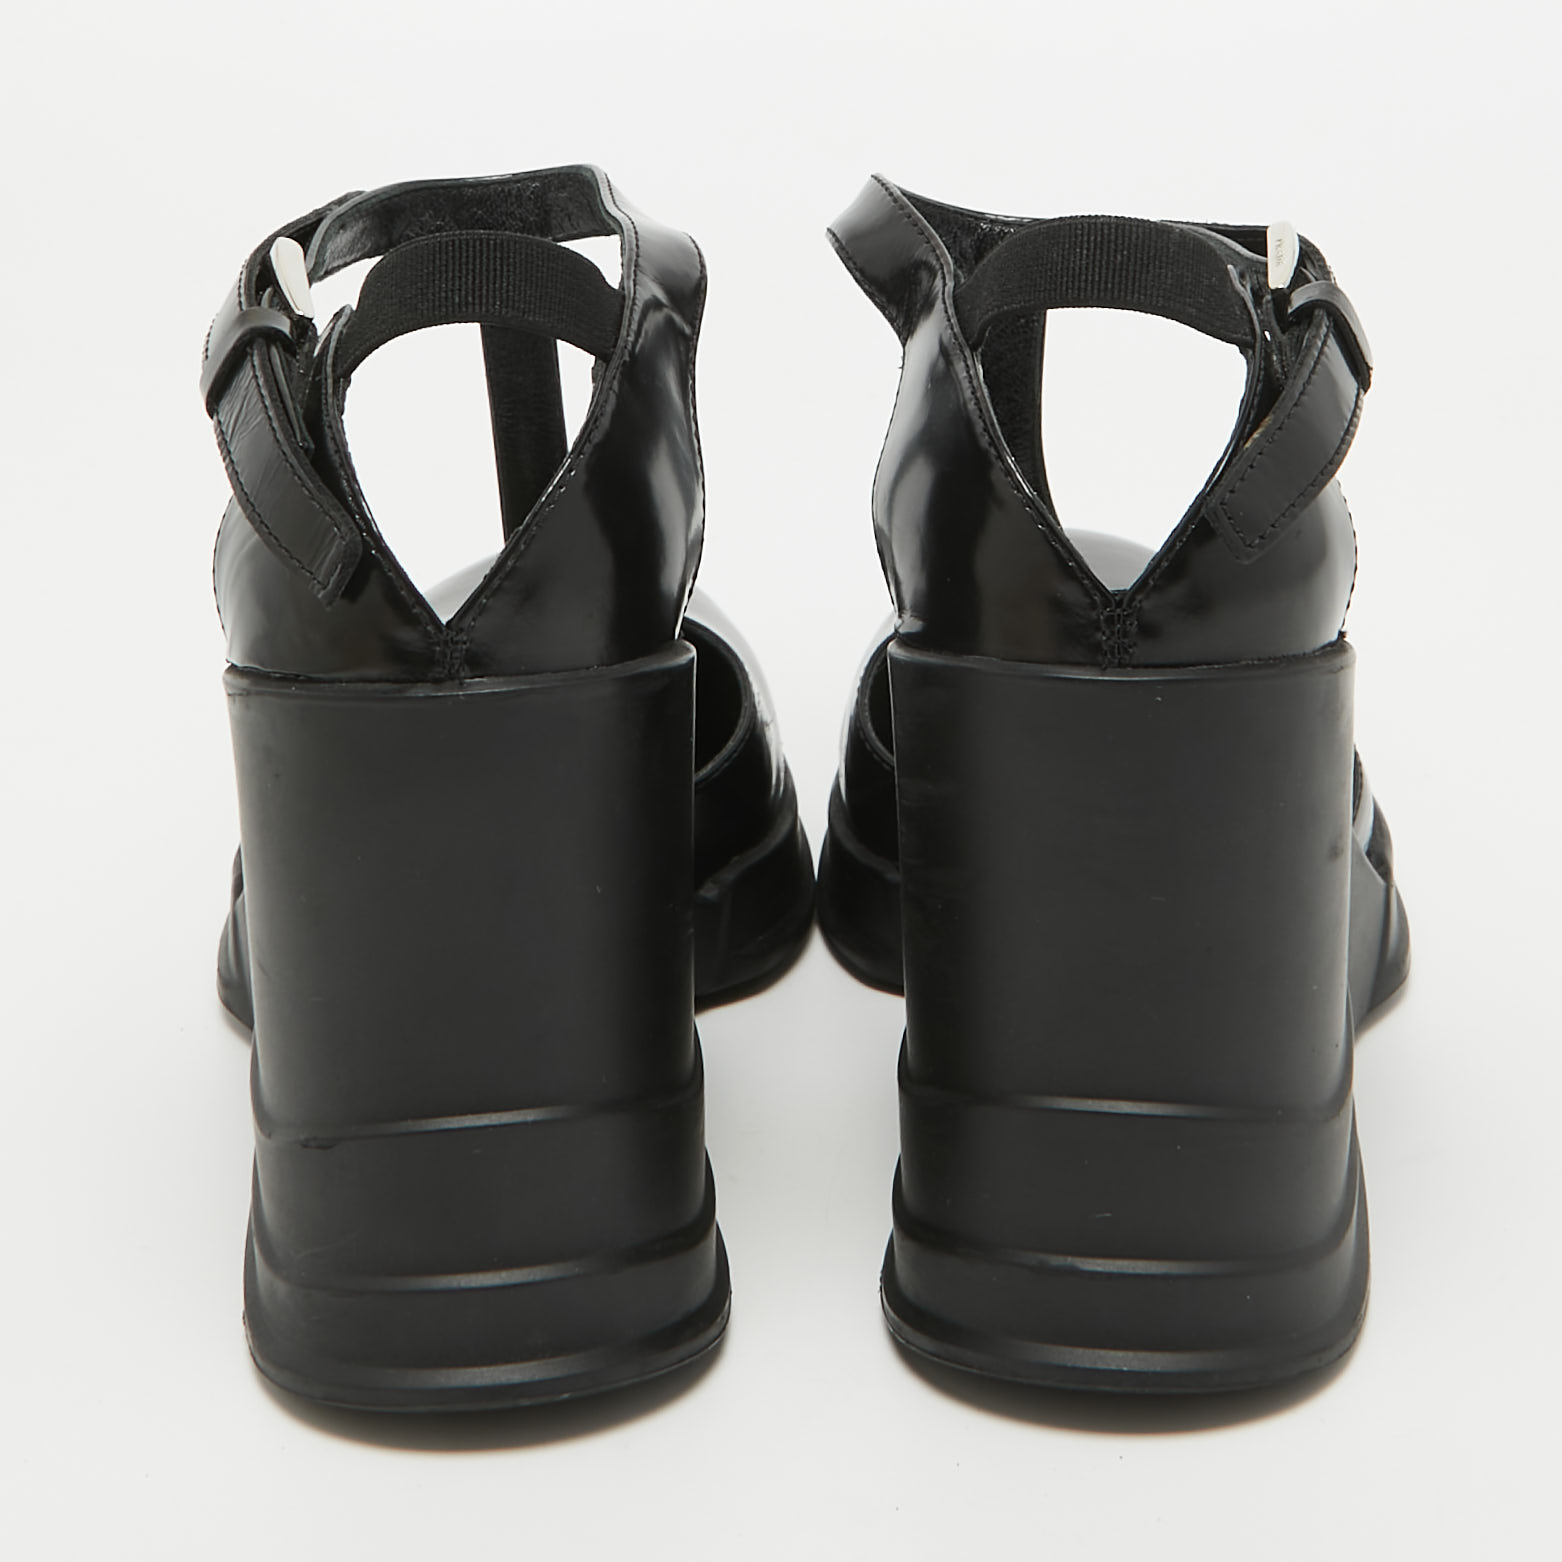 Prada Black Leather T-Strap Wedge Sandals Size 39.5